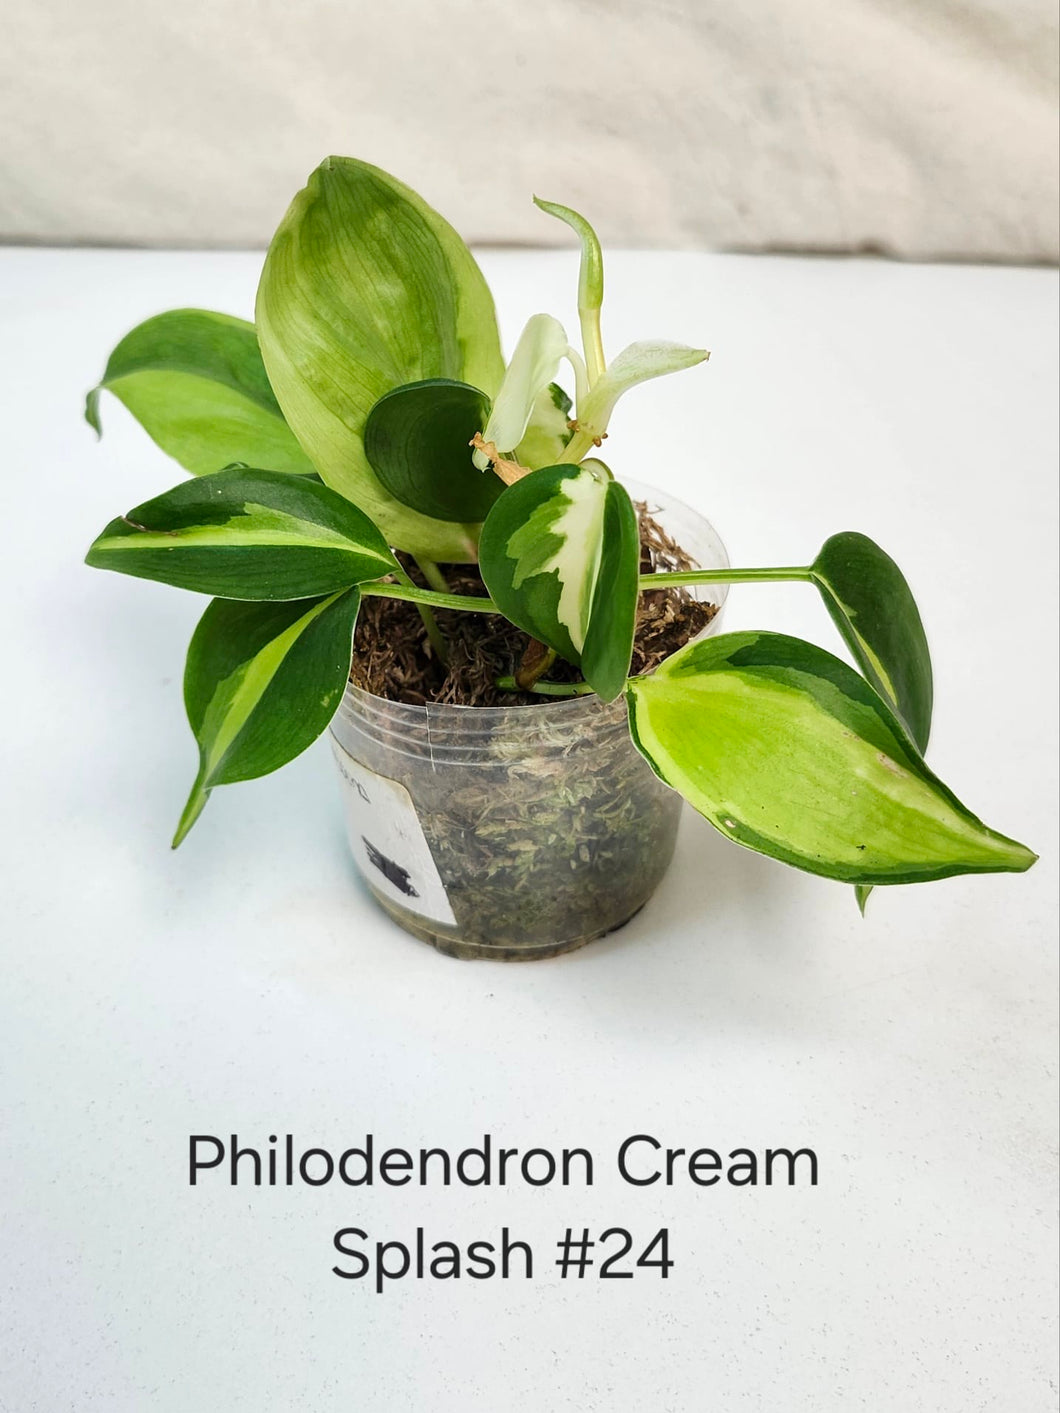 Philodendron cream splash #24